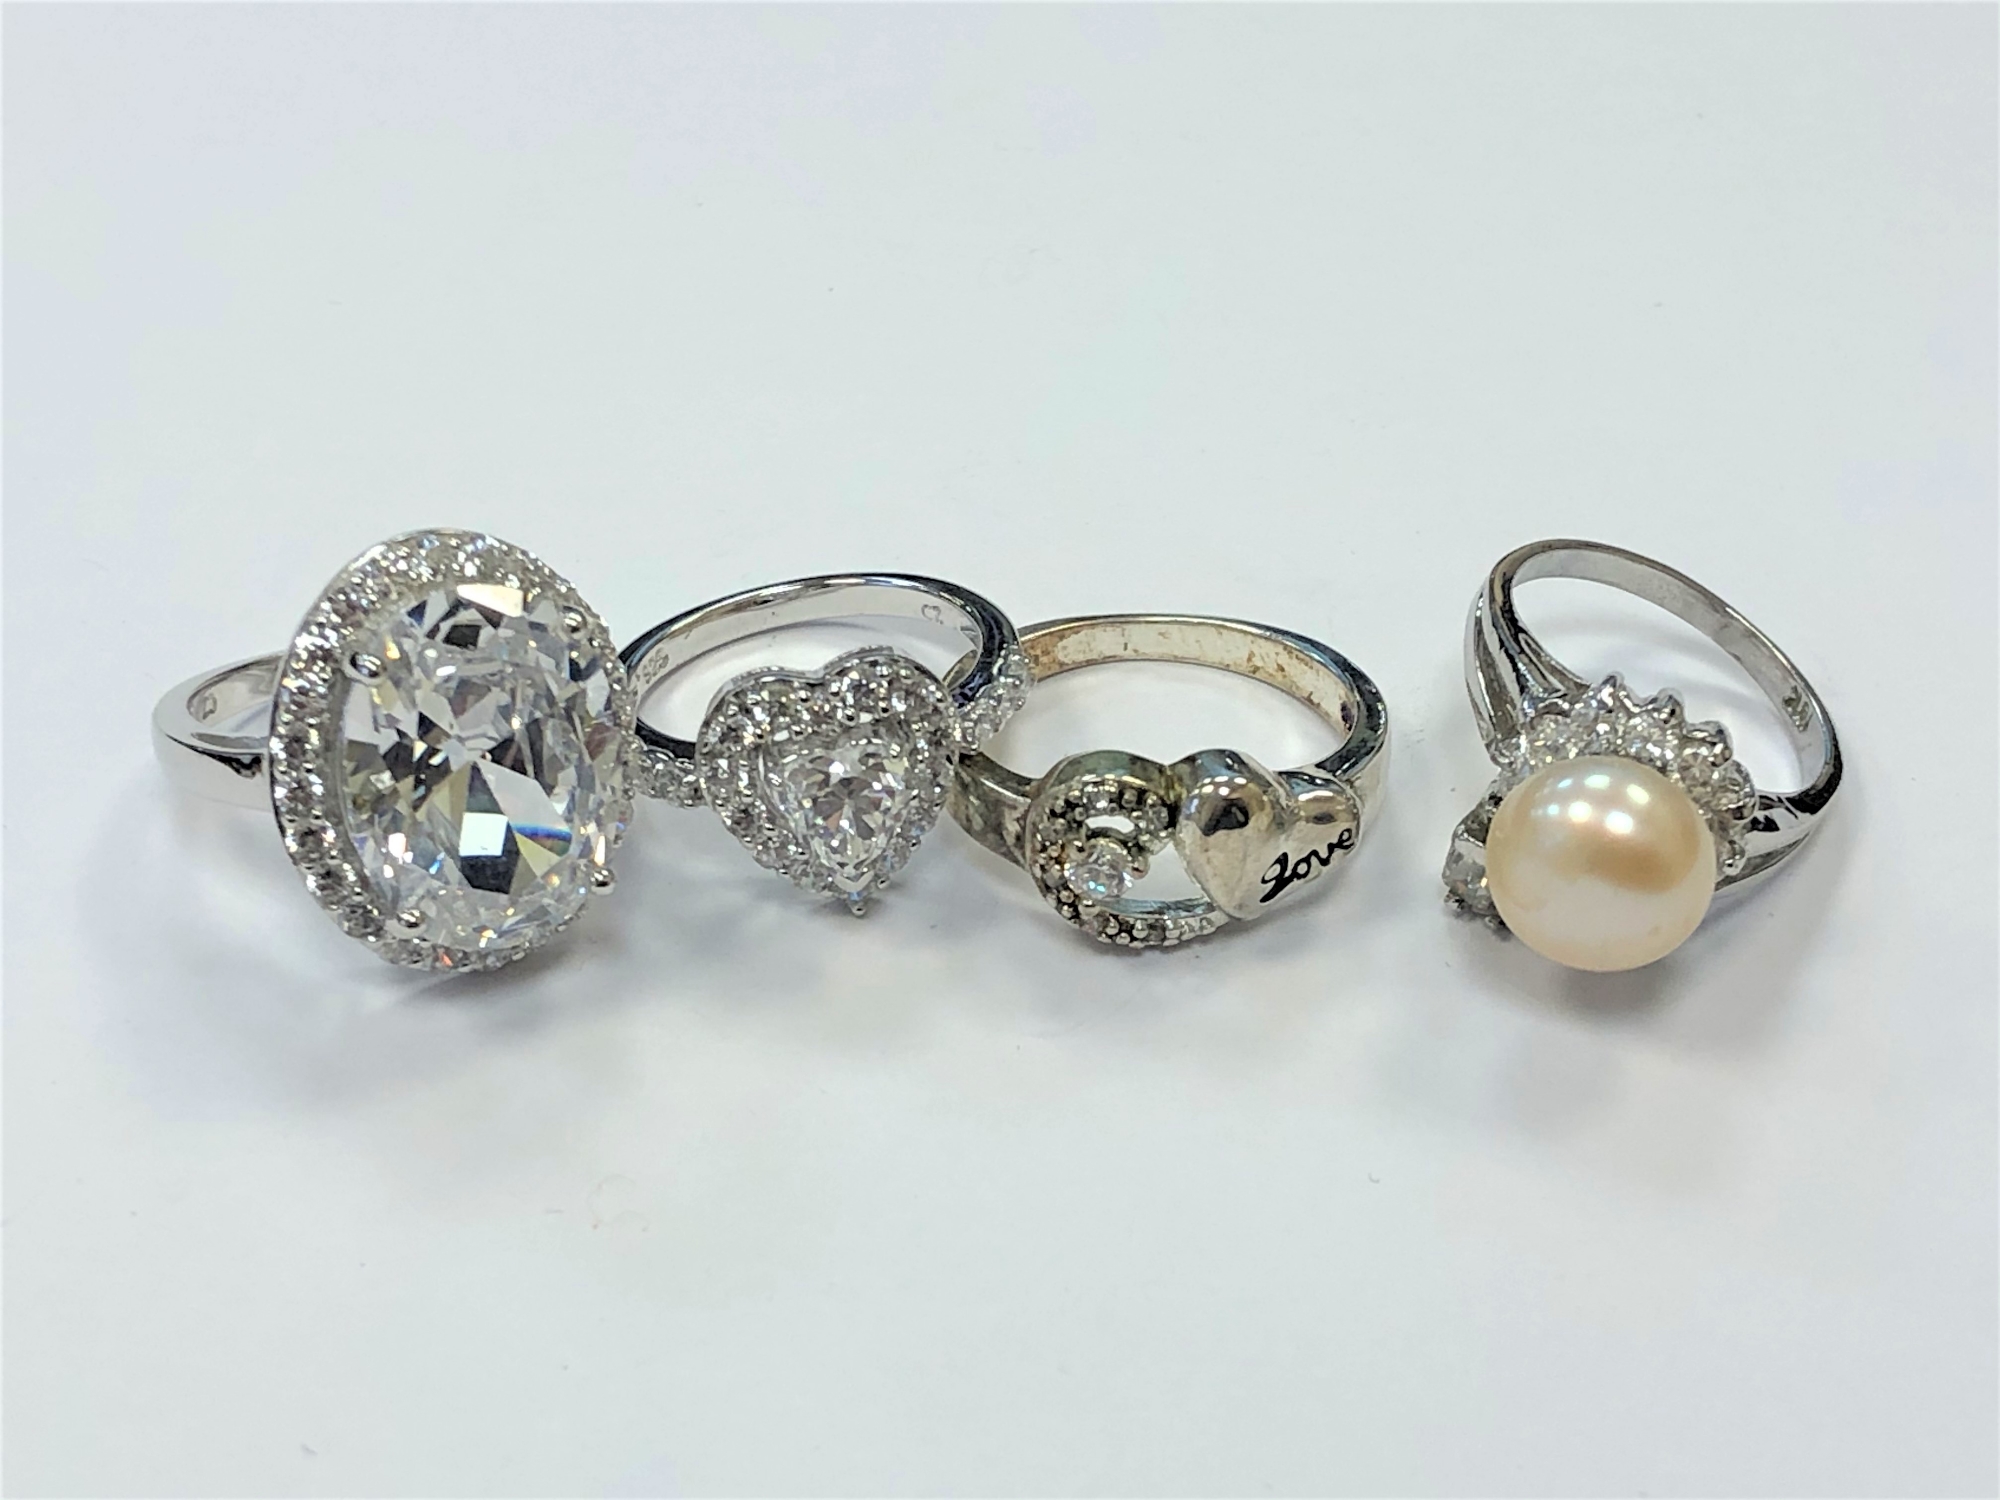 Four white metal dress rings - Image 2 of 2